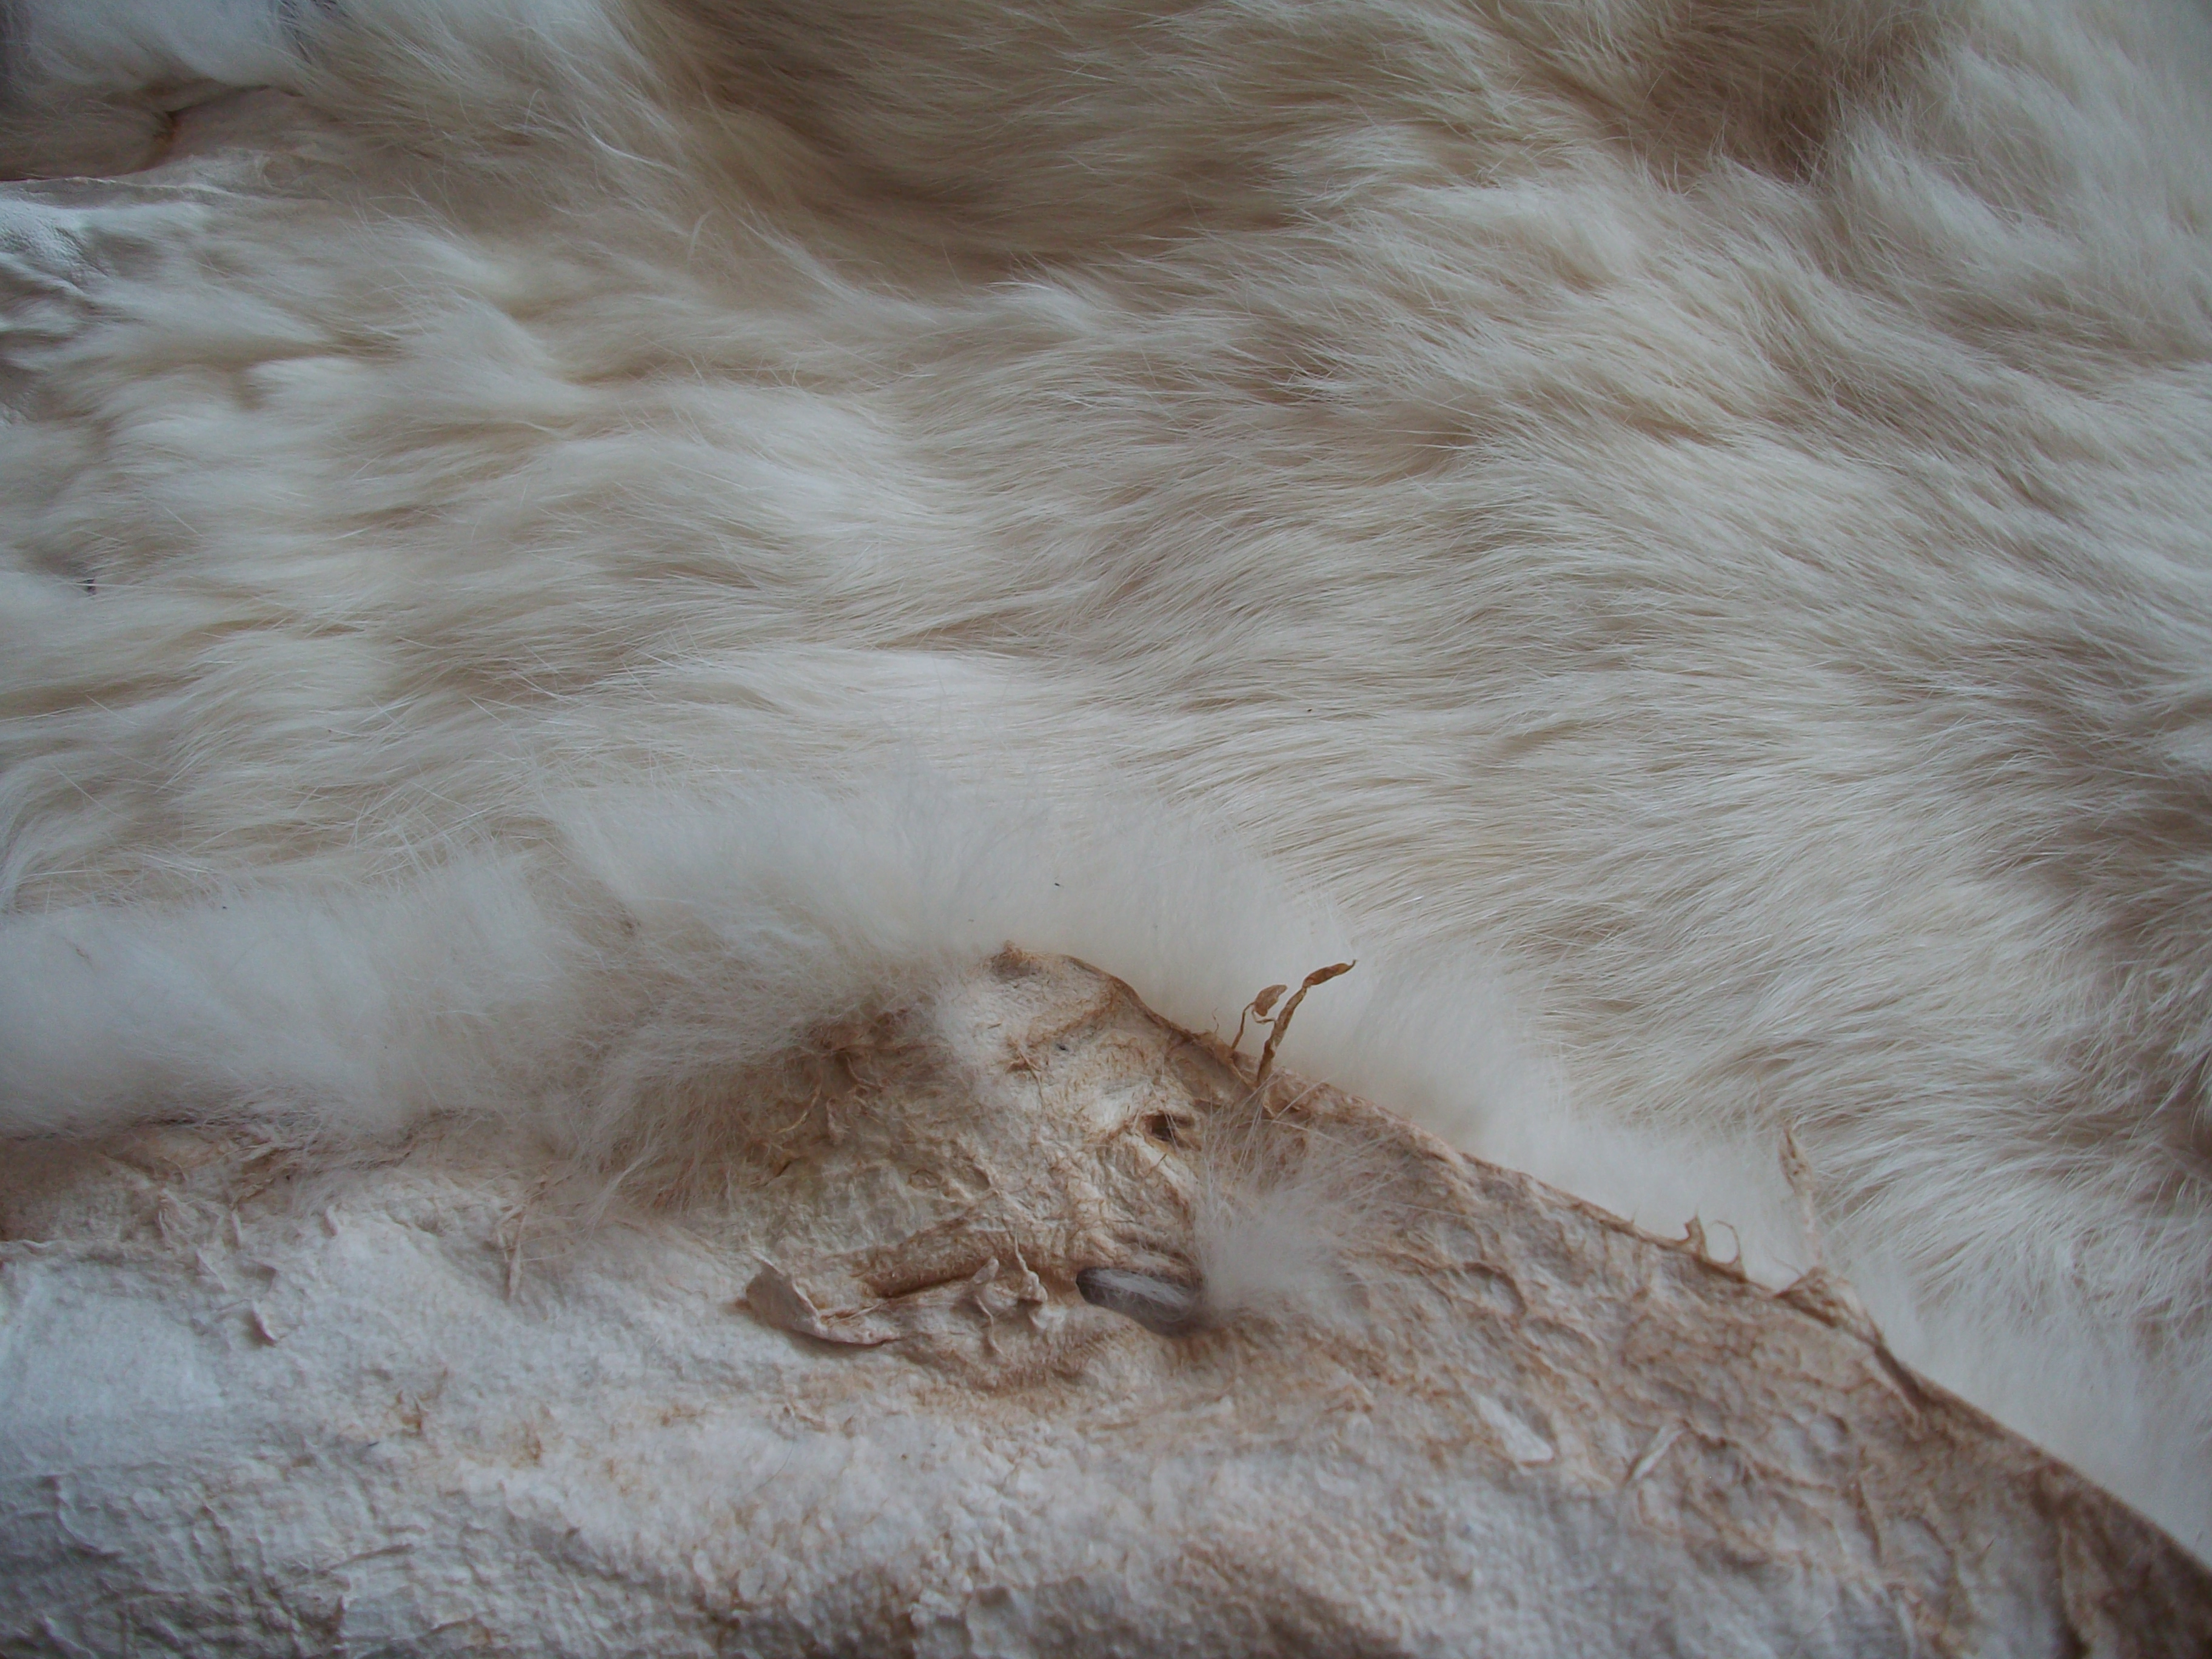 File:Rabbit pelt tanned.jpg - Wikipedia